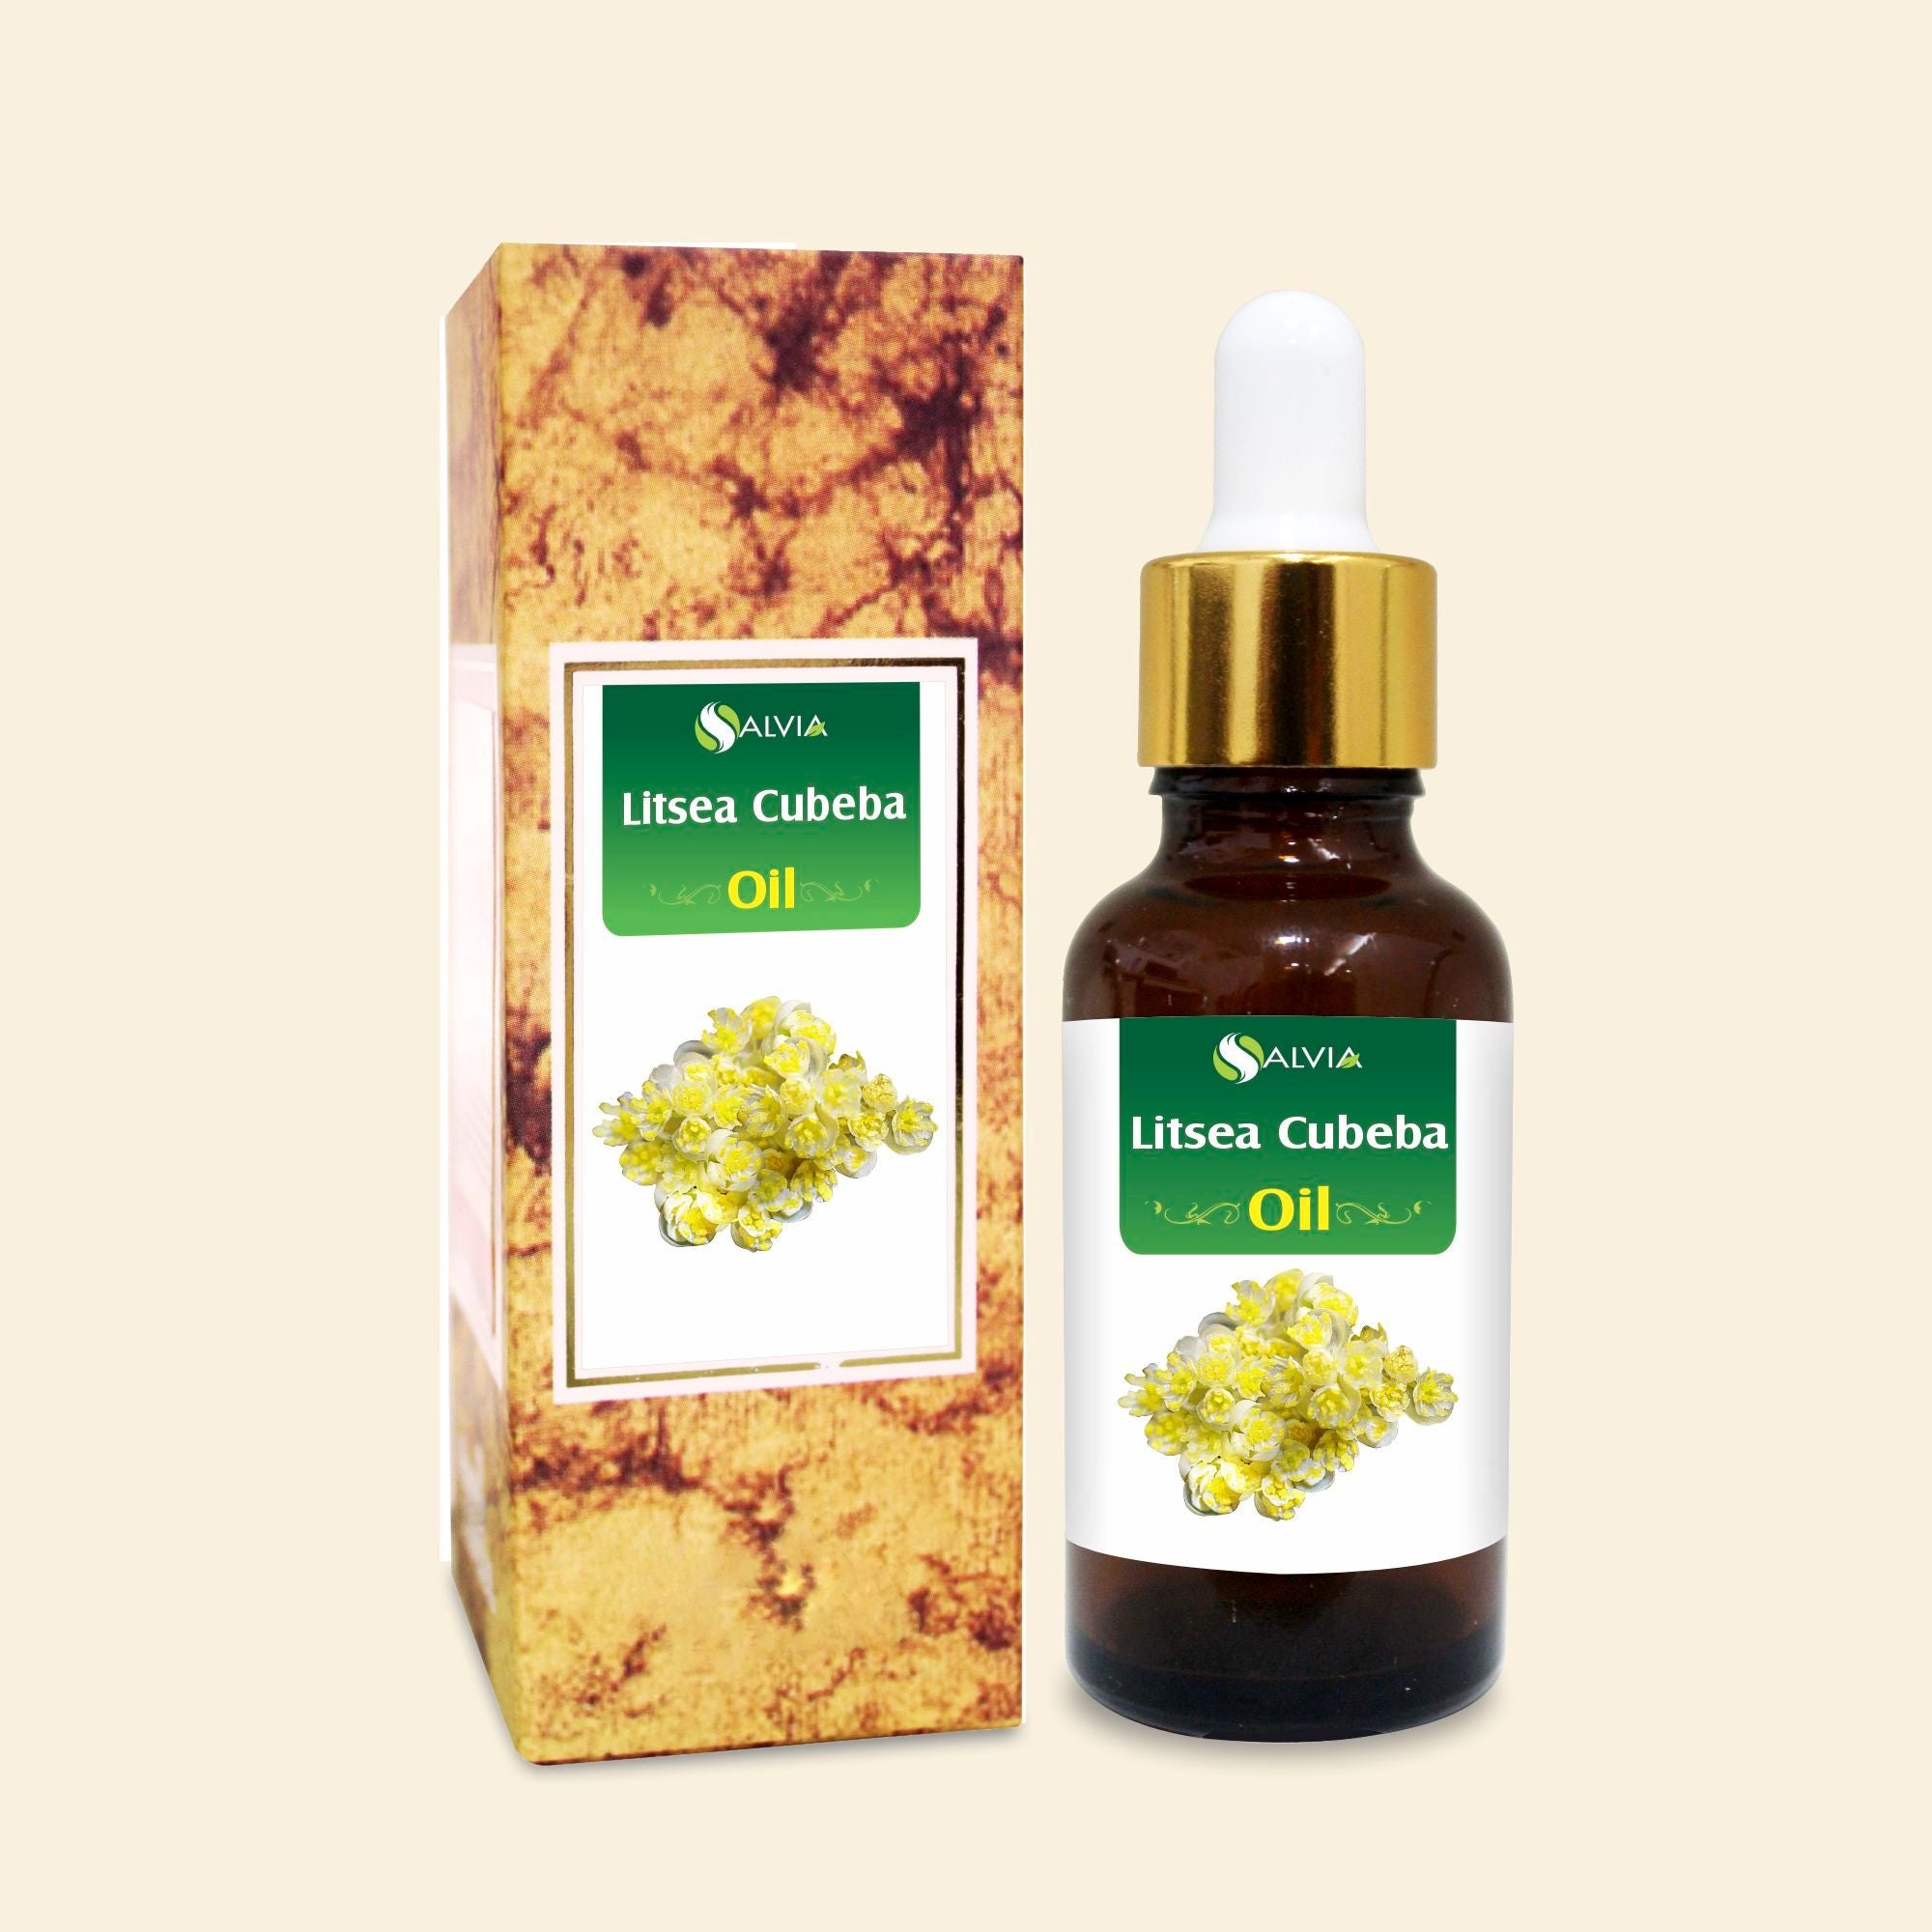 Salvia Natural Essential Oils Litsea Cubeba Oil | 100% Pure And Natural Essential Oil For Skin And Health Care